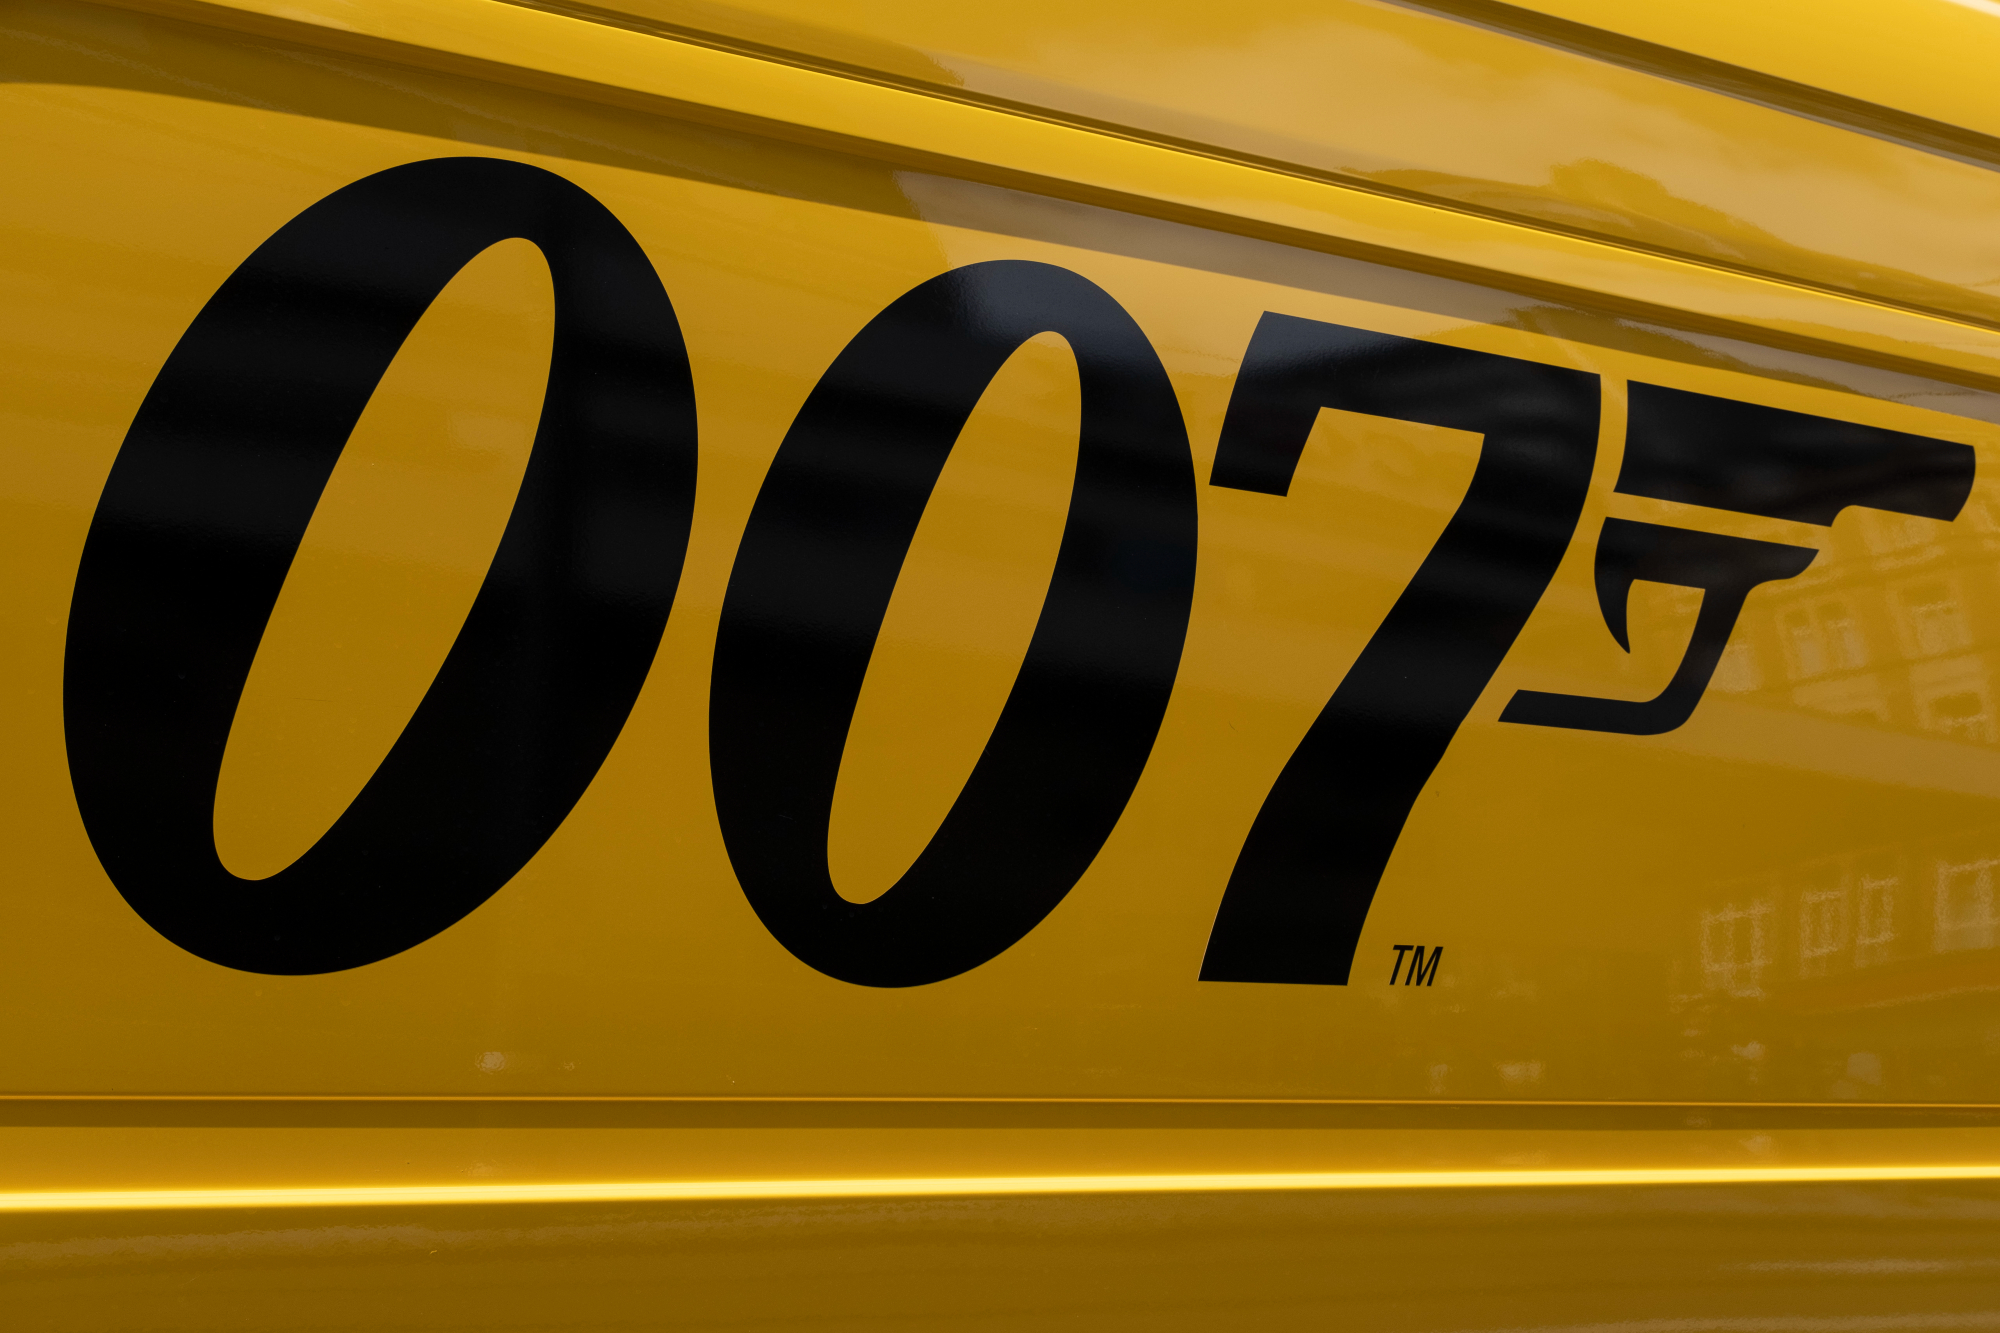 James Bond 007 logo on the side of a DHL delivery van